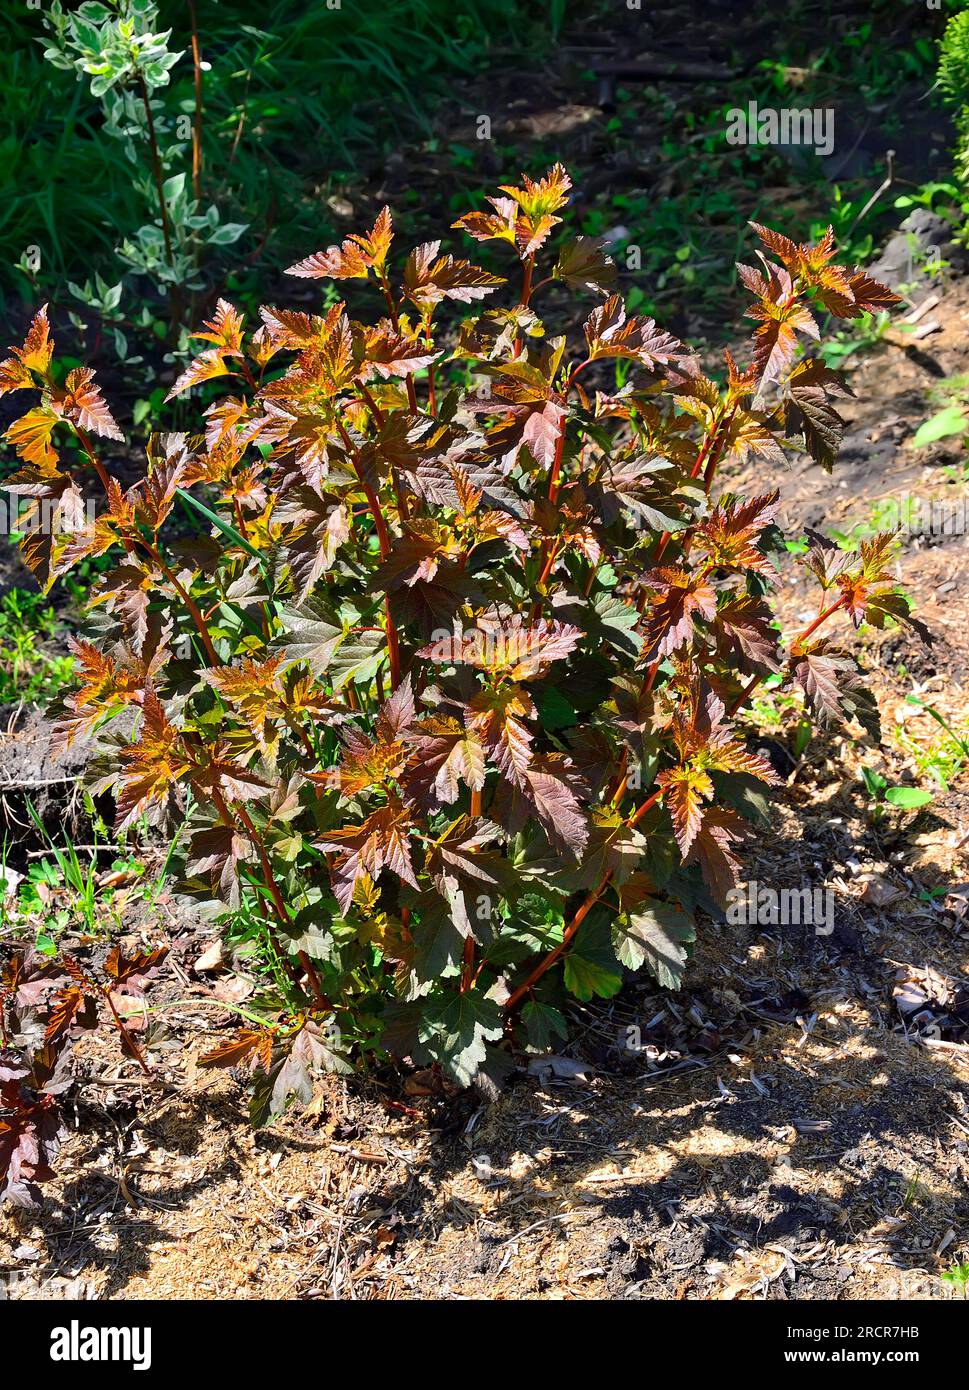 Bush of Viburnum bladder (Physocarpus opulifolius or Spiraea opulifolia), variety Andre with colorful leaves: red - orange, purple -green, yellow. Dec Stock Photo